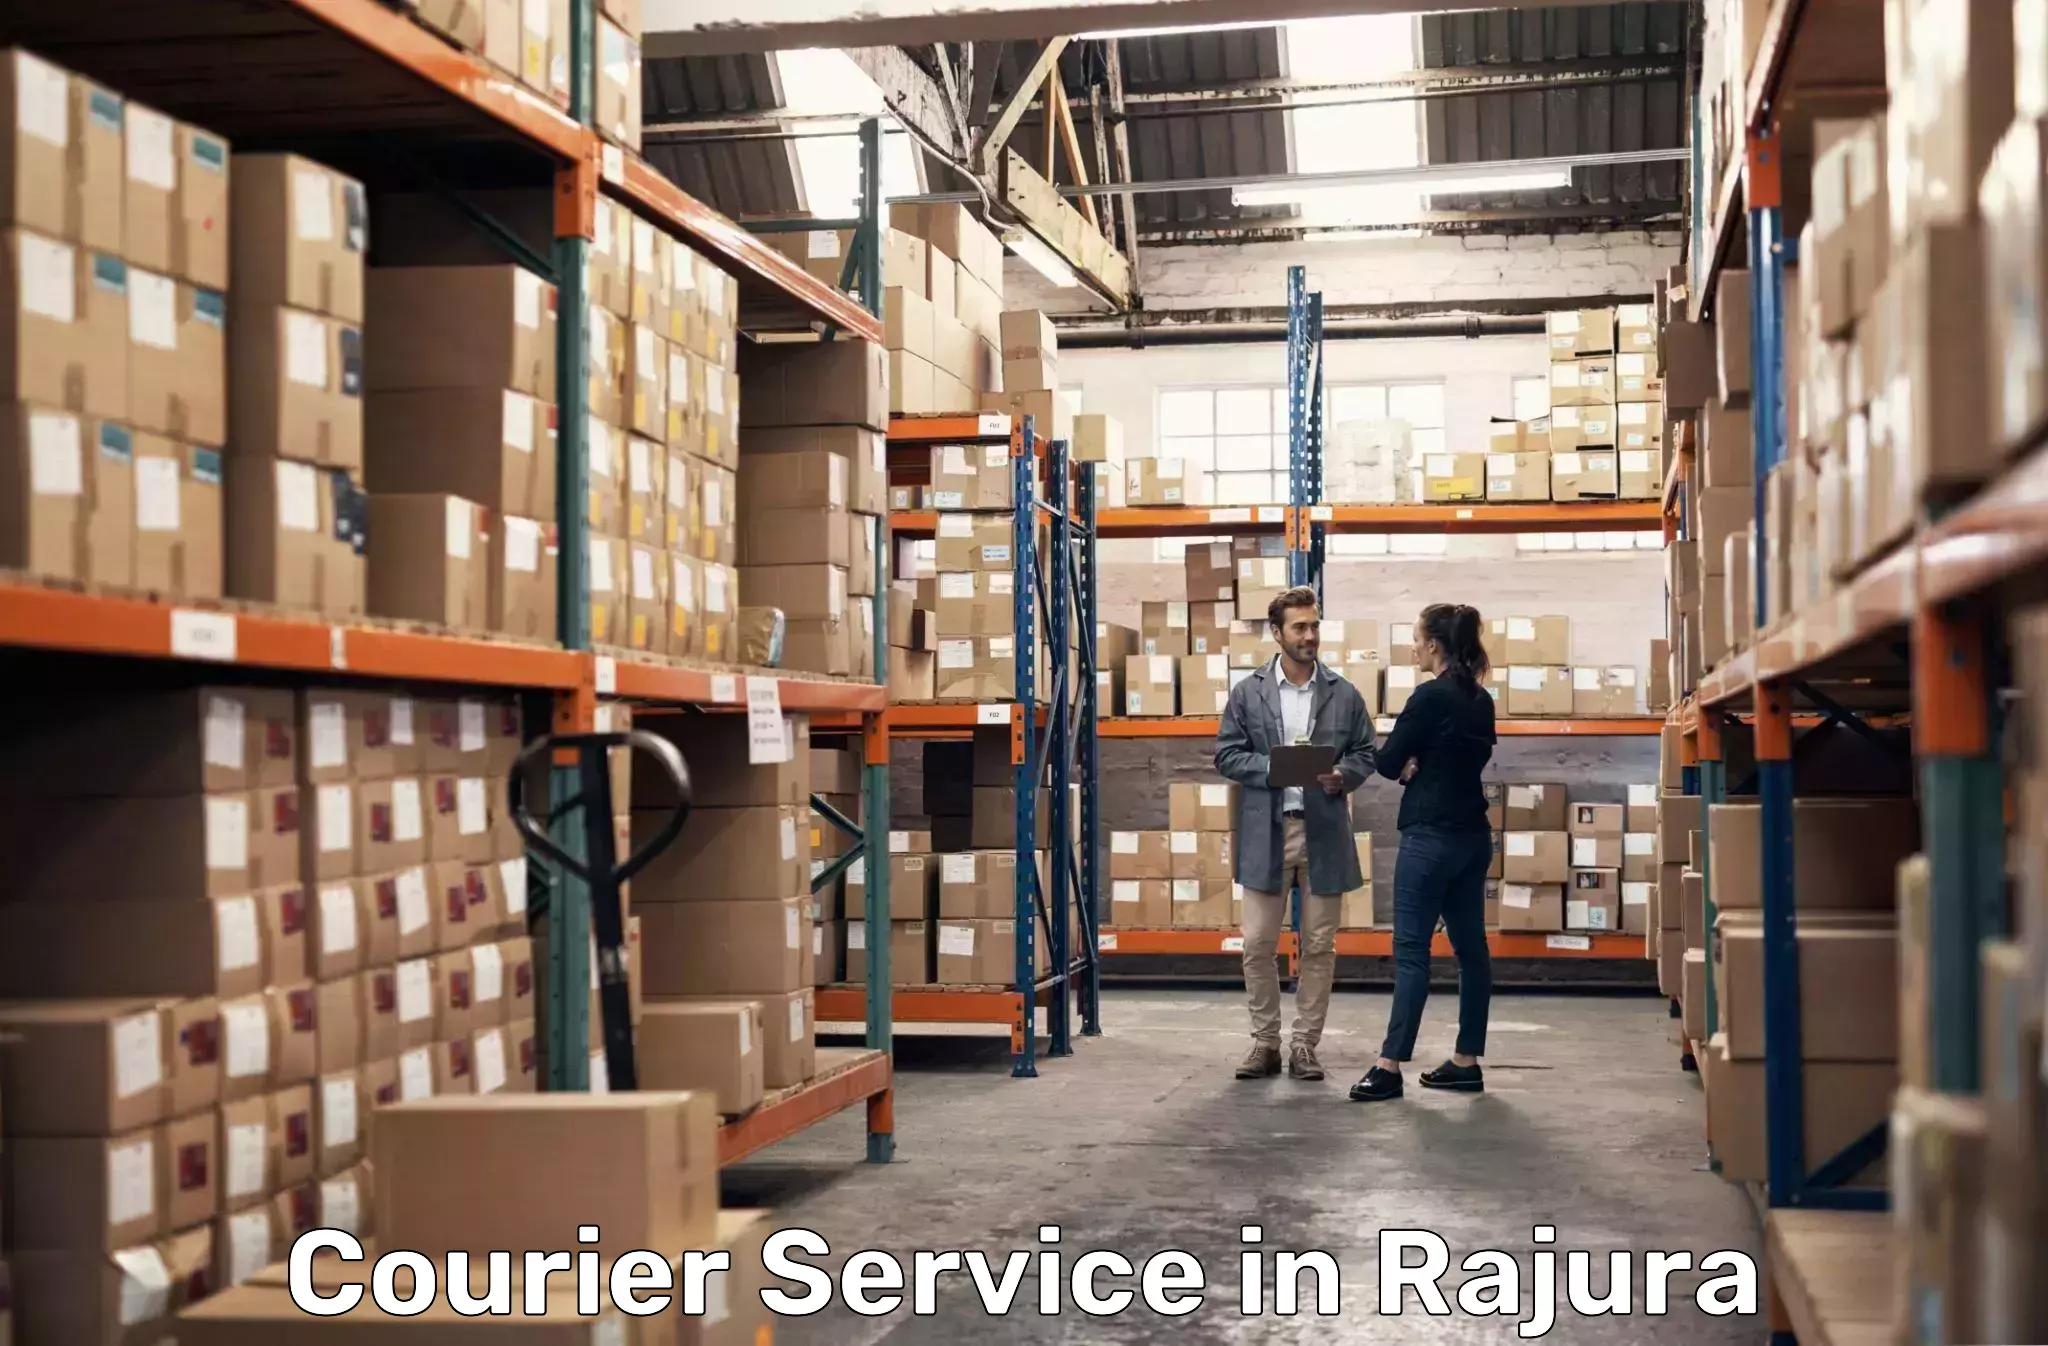 Logistics and distribution in Rajura